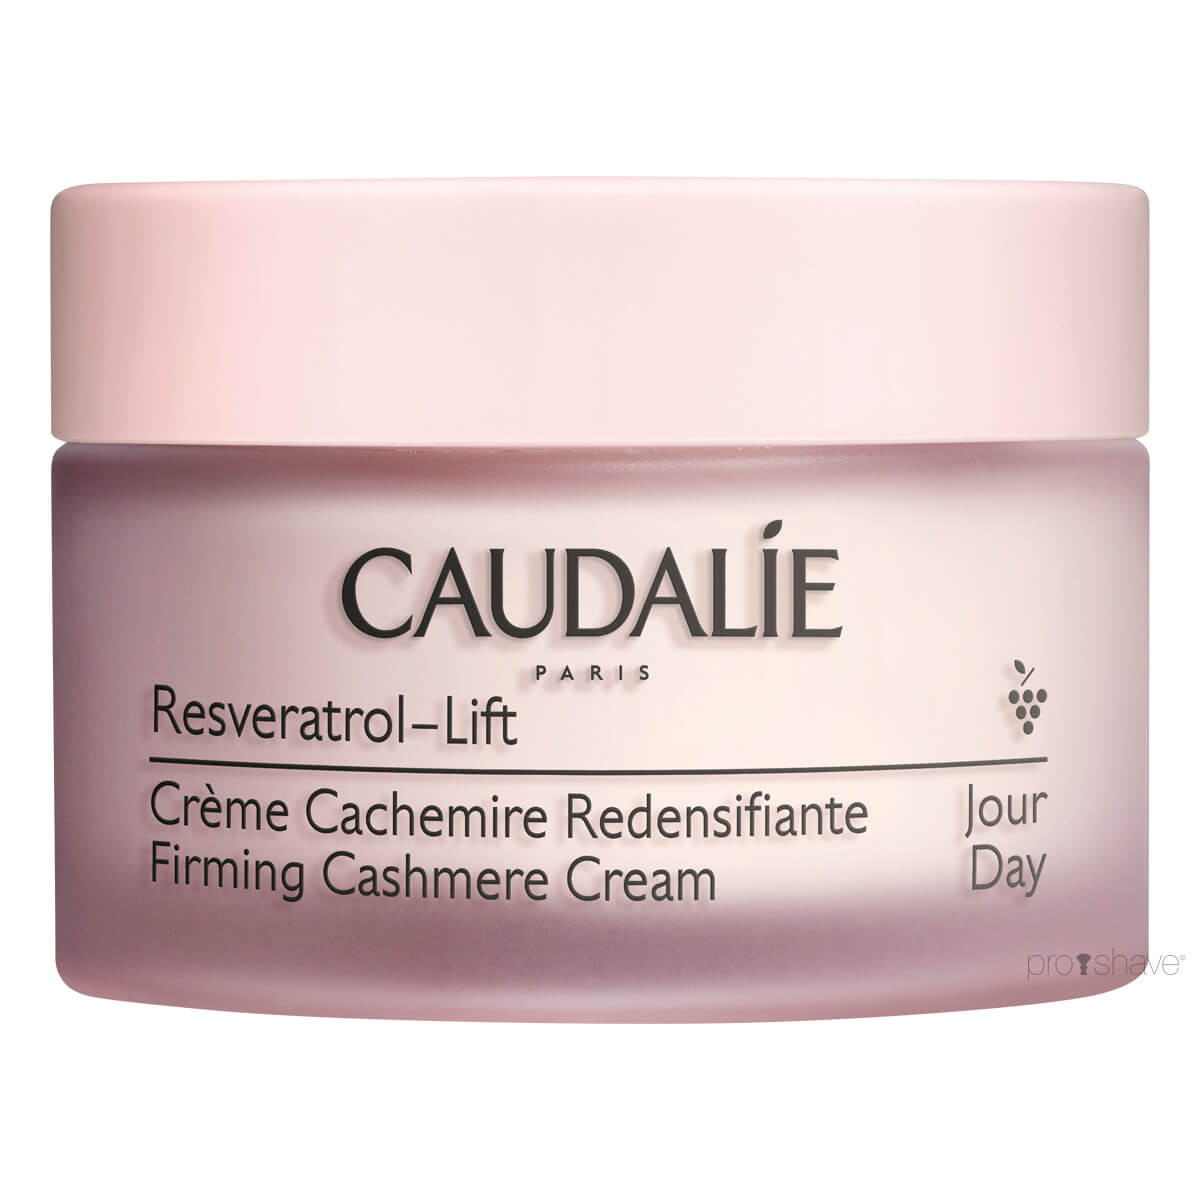 Caudalie Resveratrol Lift, Firming Cashmere Cream, 50 ml.